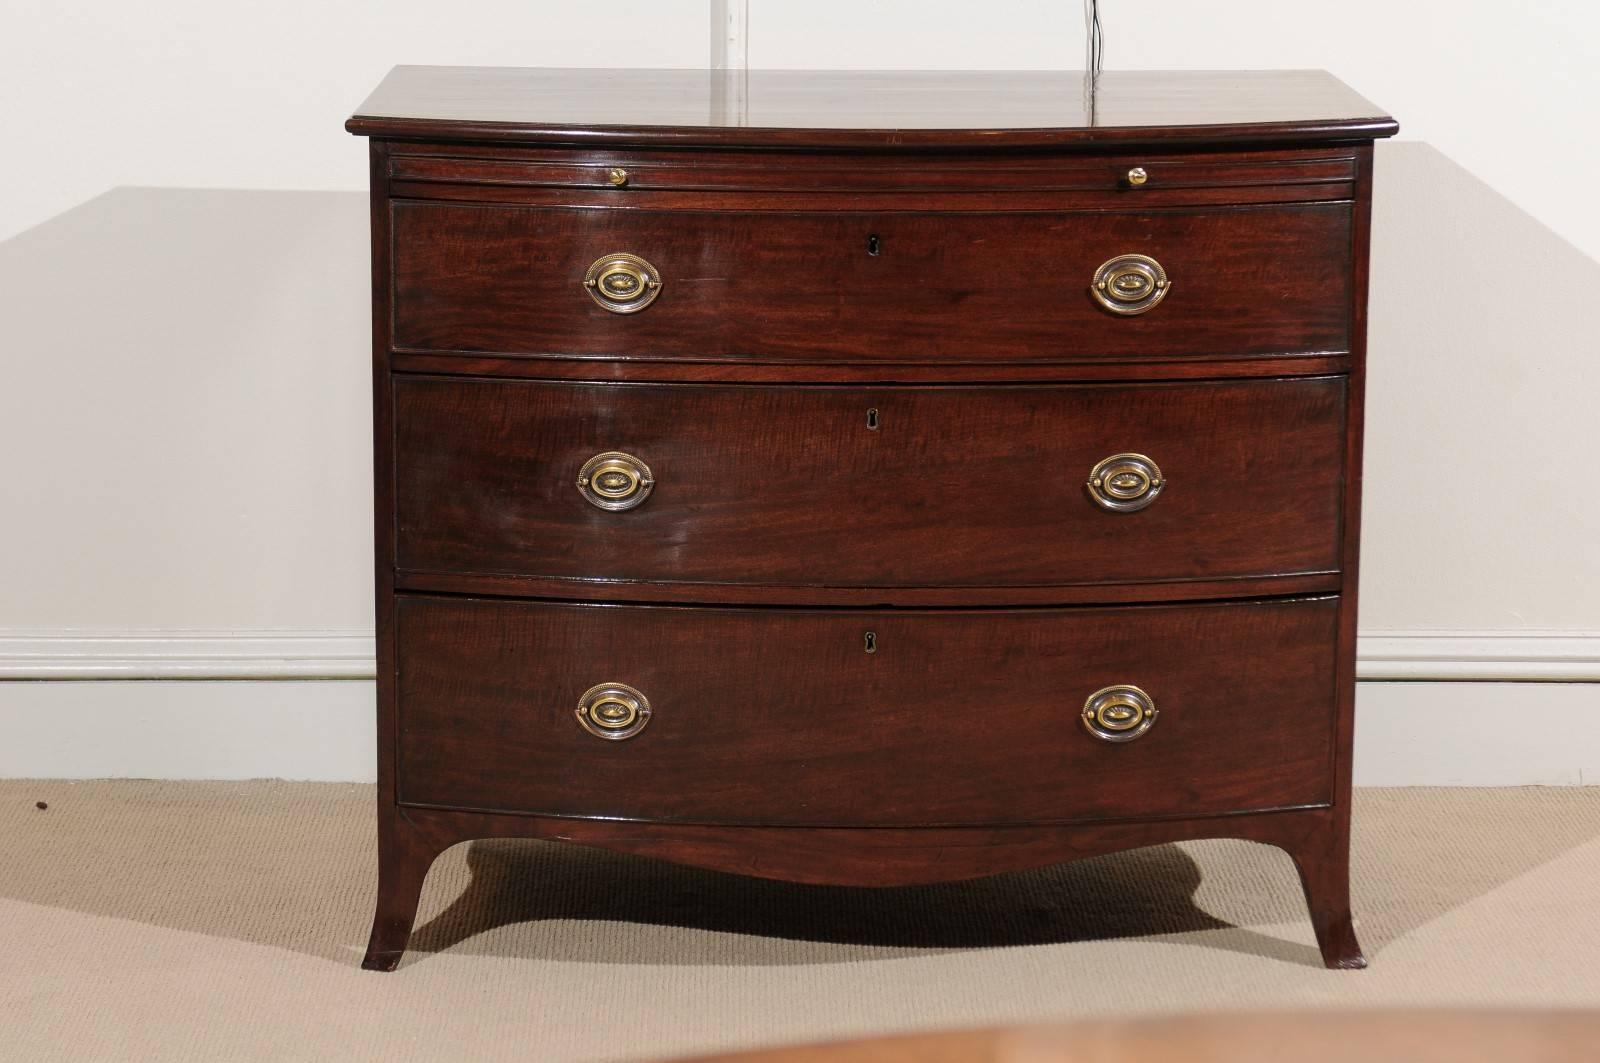 Three-drawer chest in mahogany.